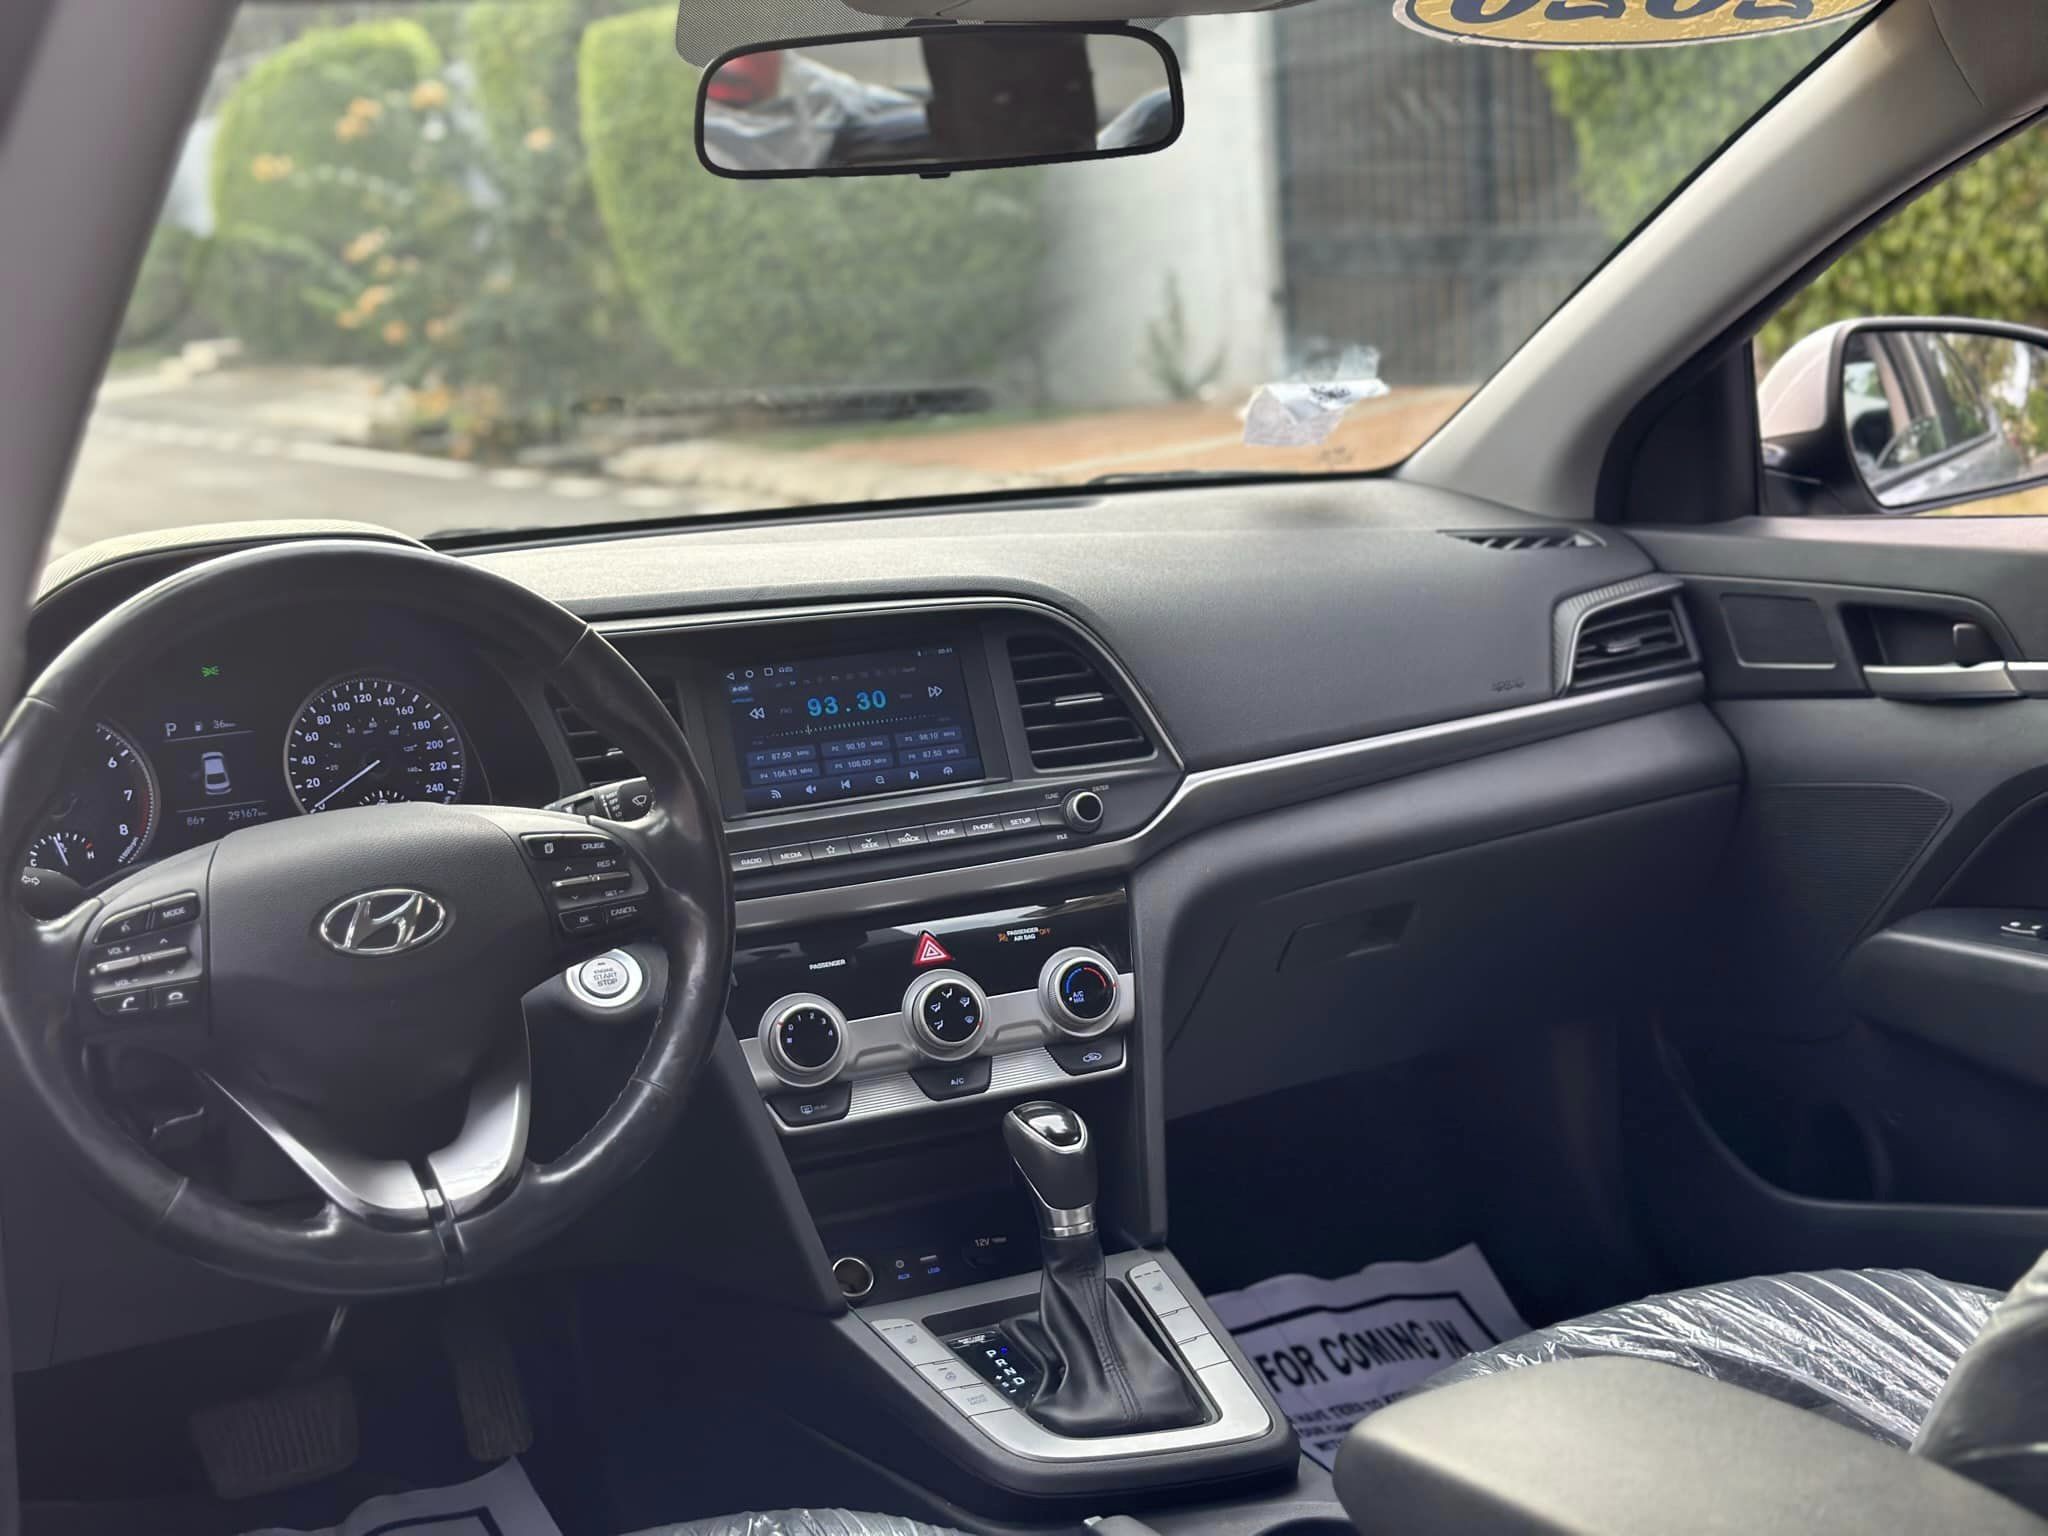 Hyundai Elantra nouveau modèle 2020